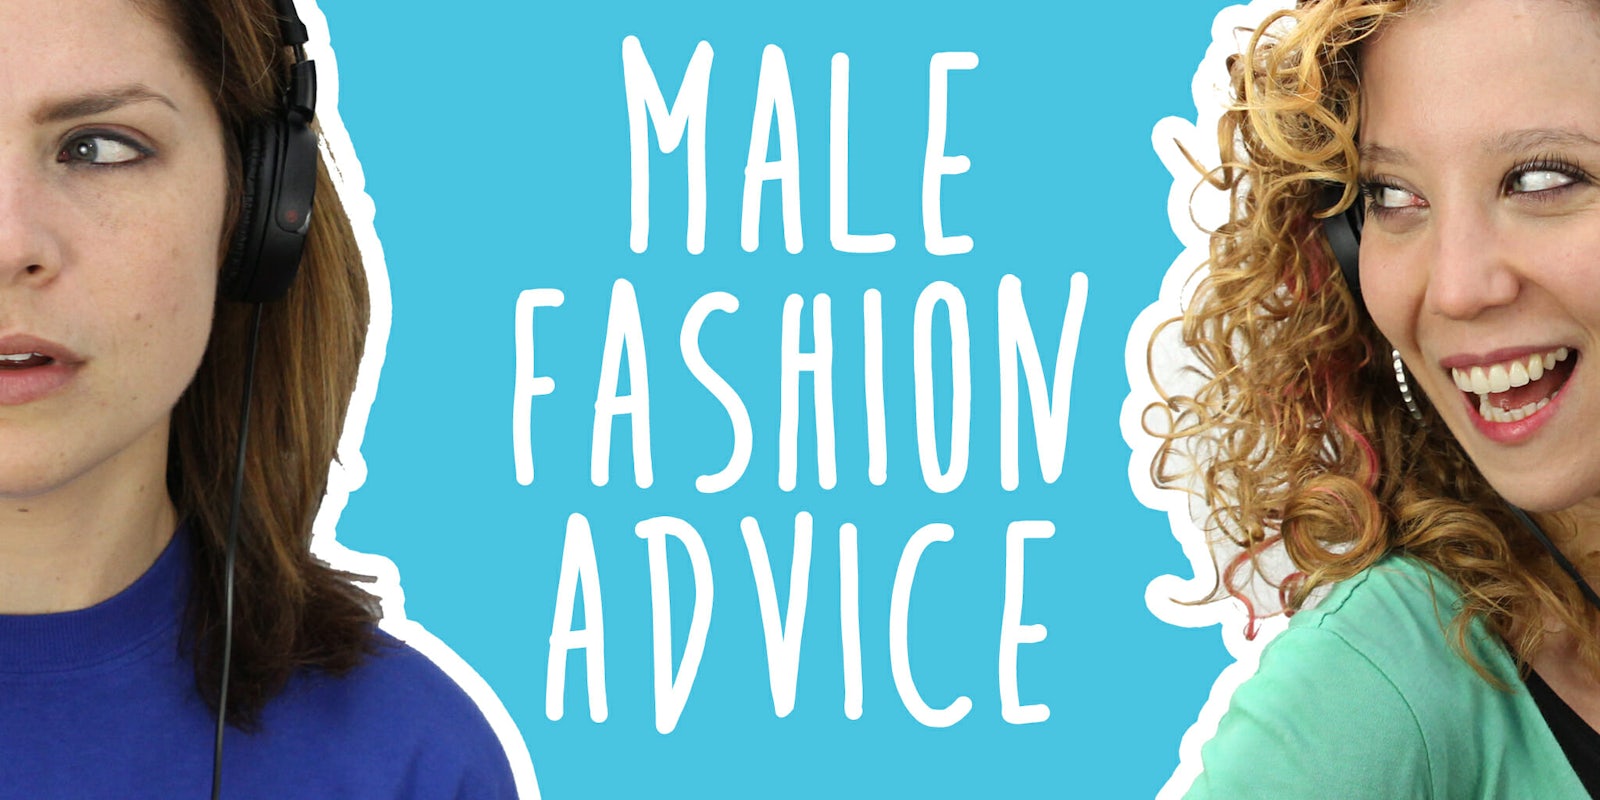 2 Girls 1 Podcast: Inside's Reddit's Male Fashion Advice